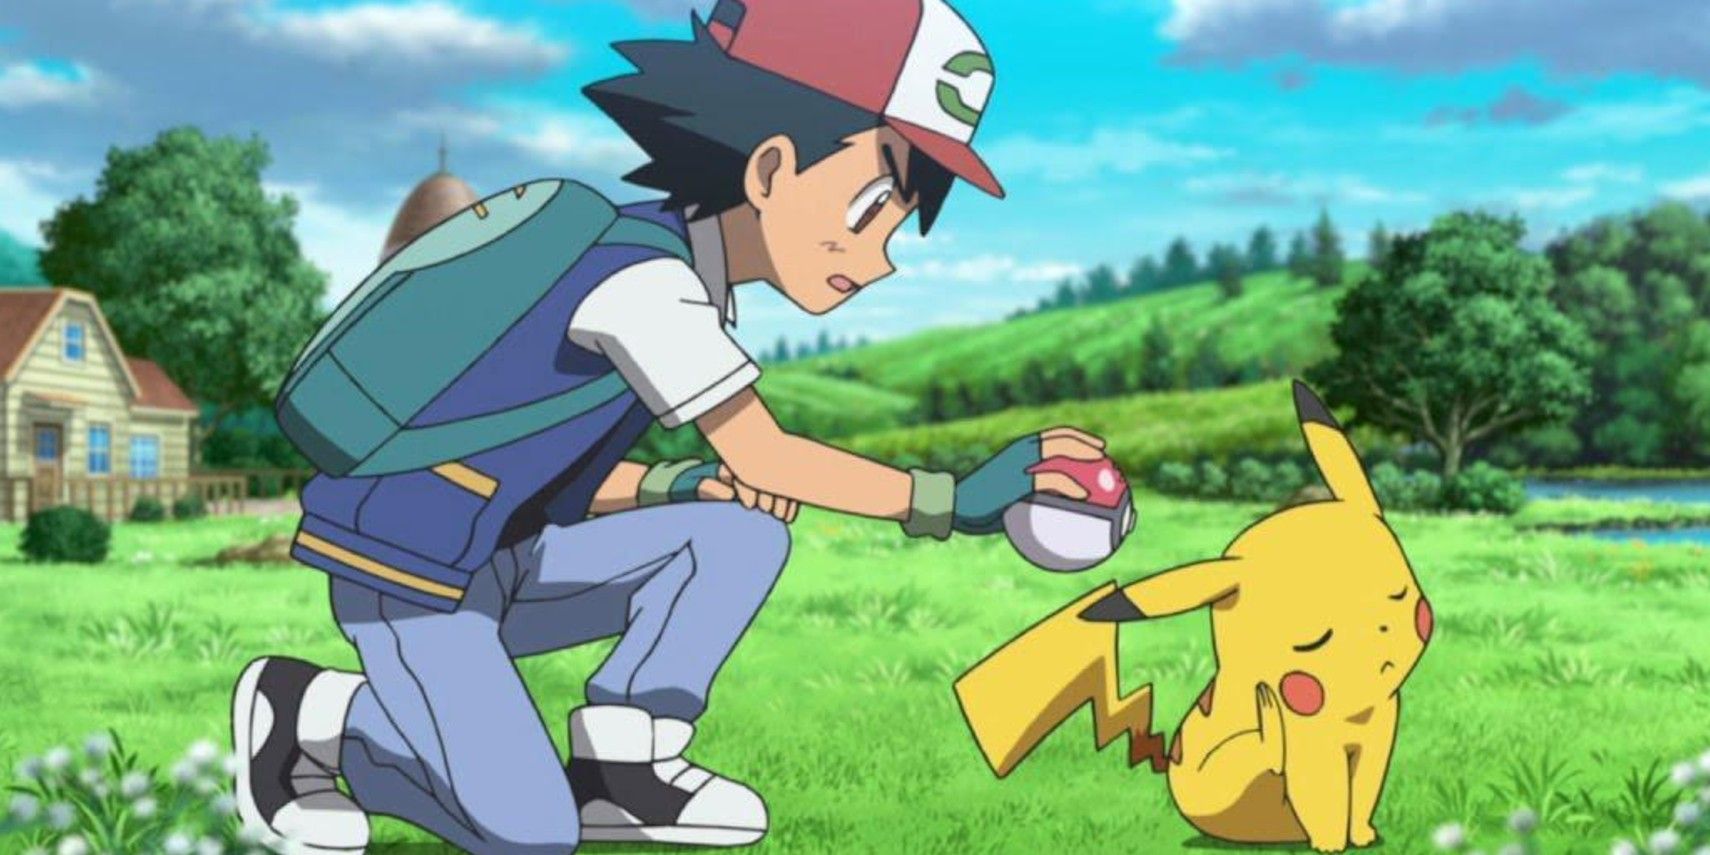 Pokémon Why Ashs Pikachu Has Always Refused to Go Inside a Pokéball